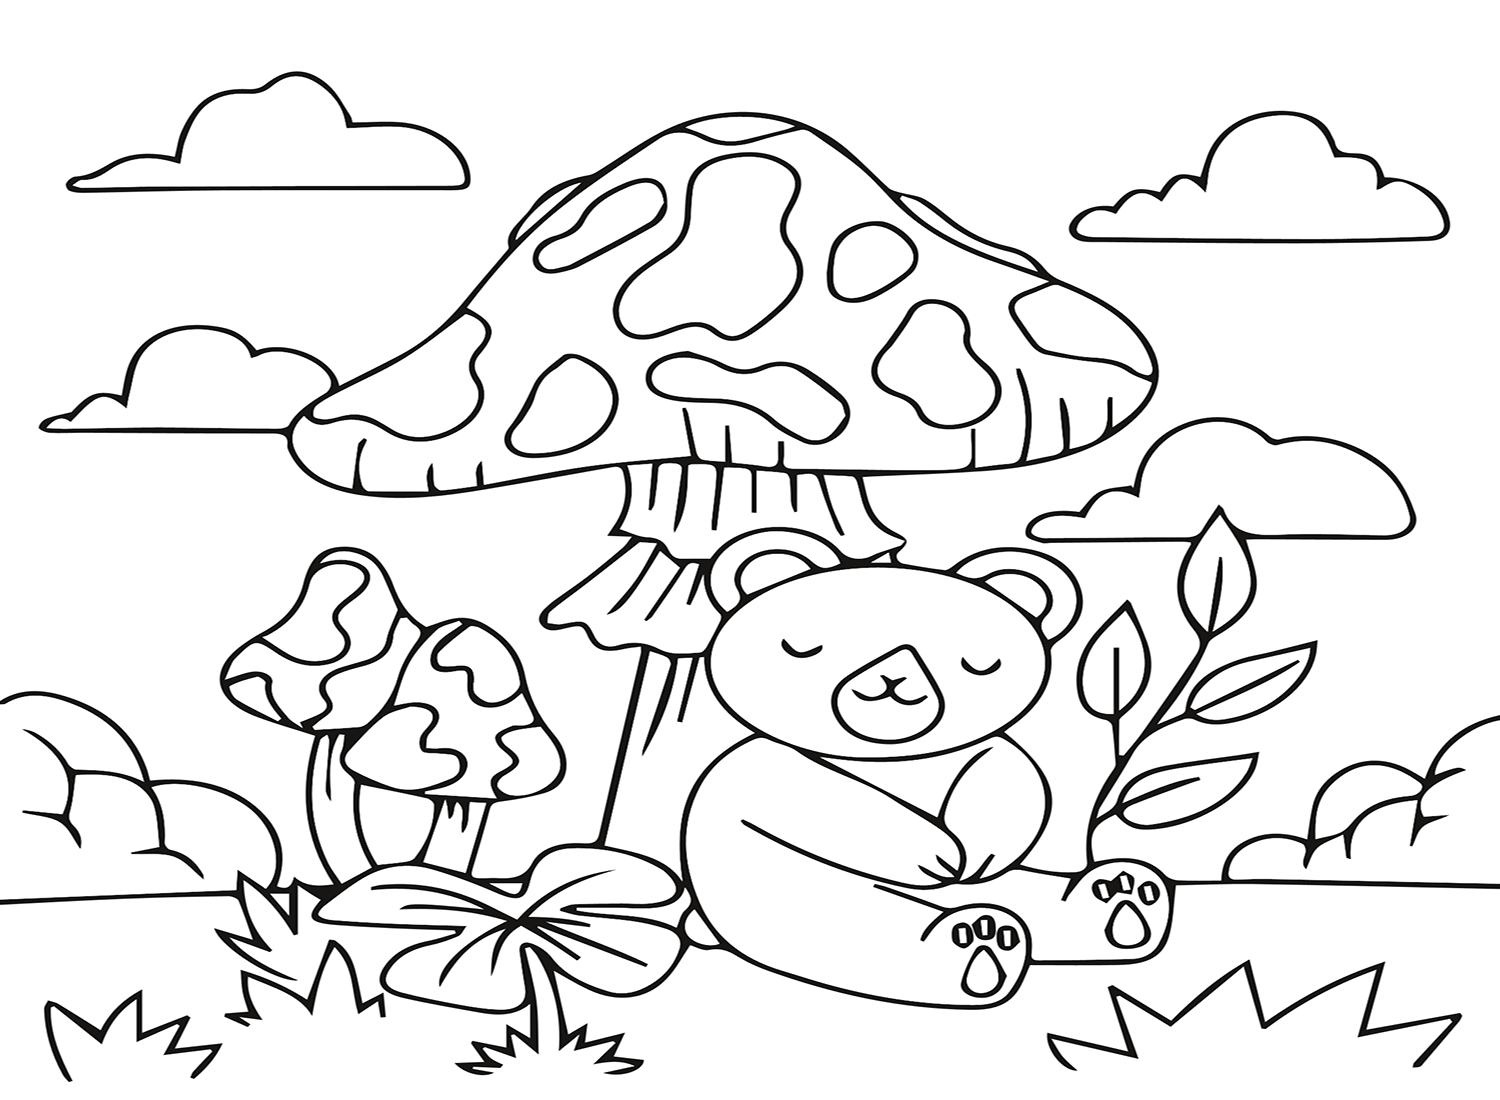 Kawaii Drawings Animal Coloring Pages